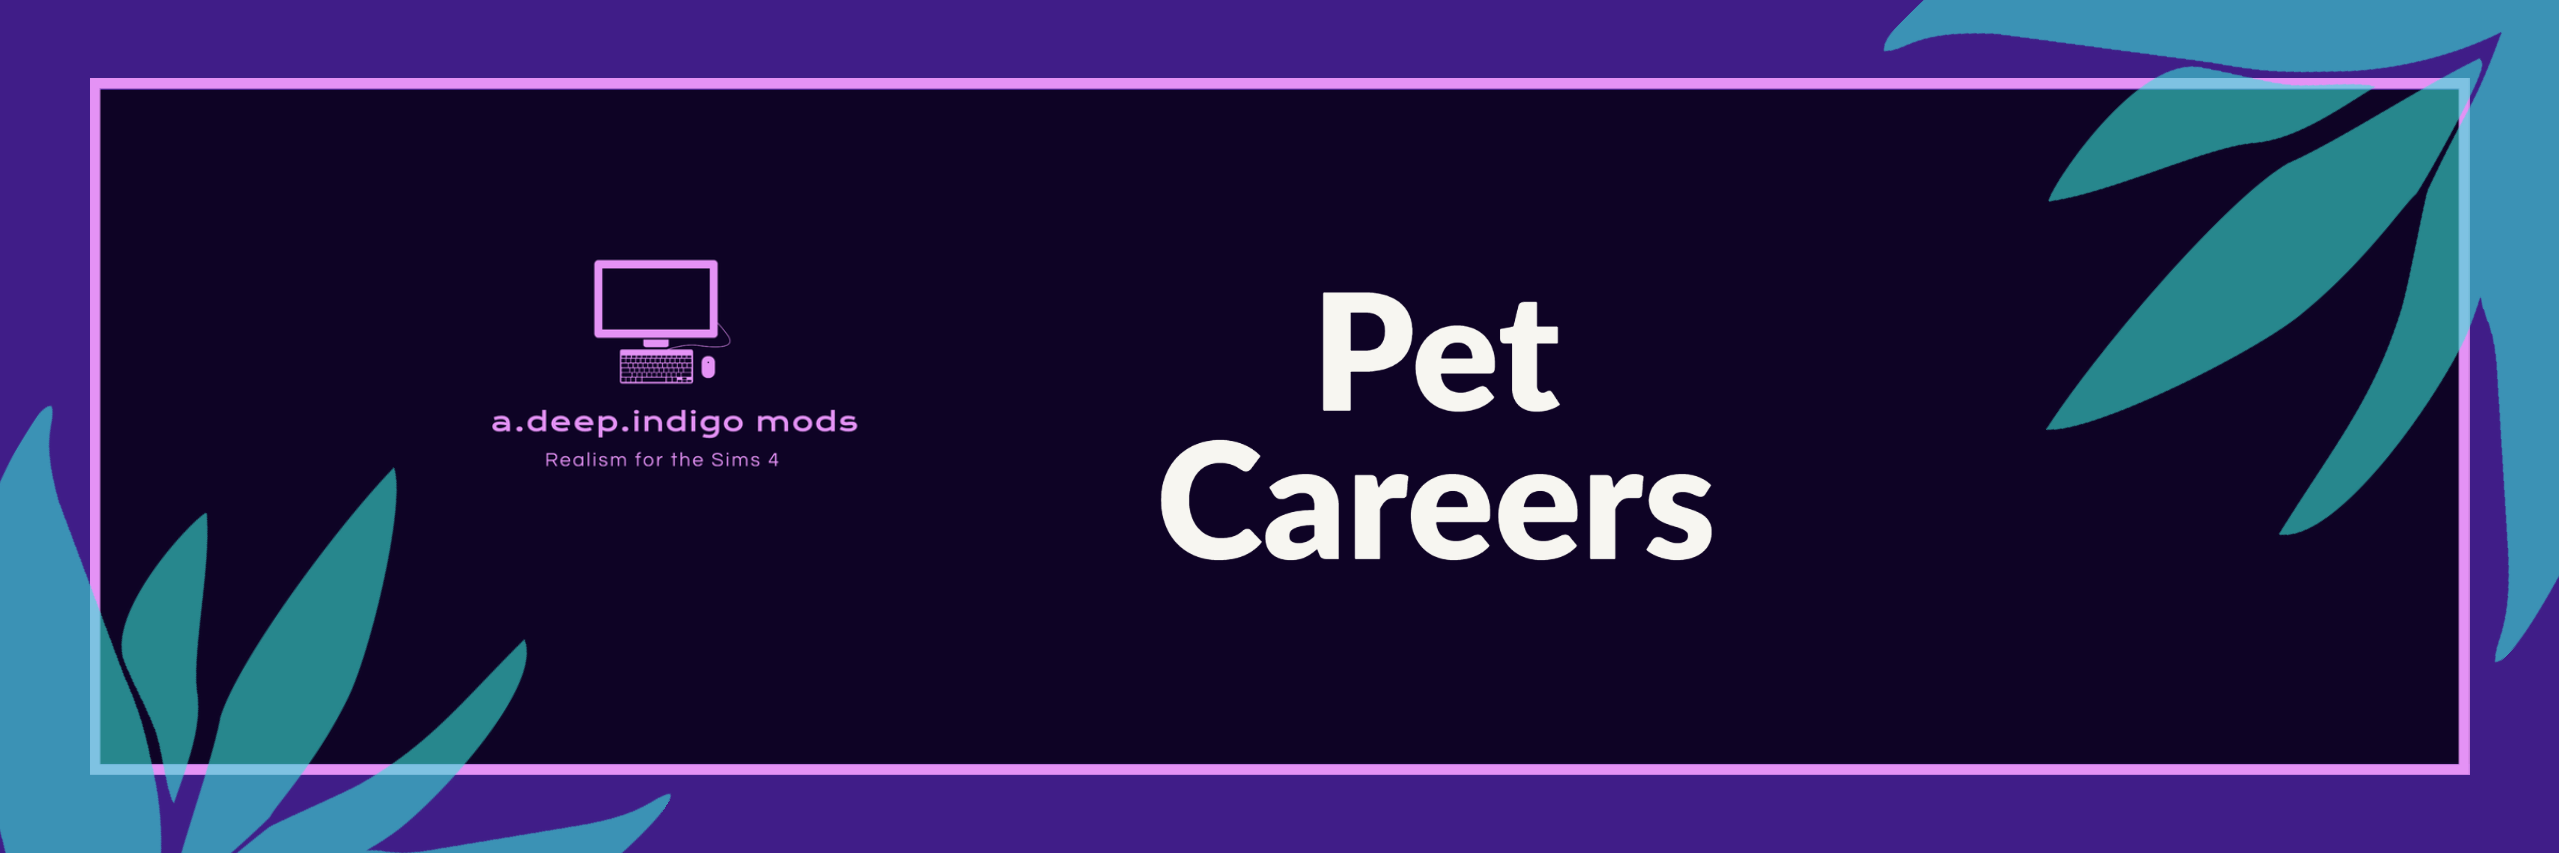 Pet Careers